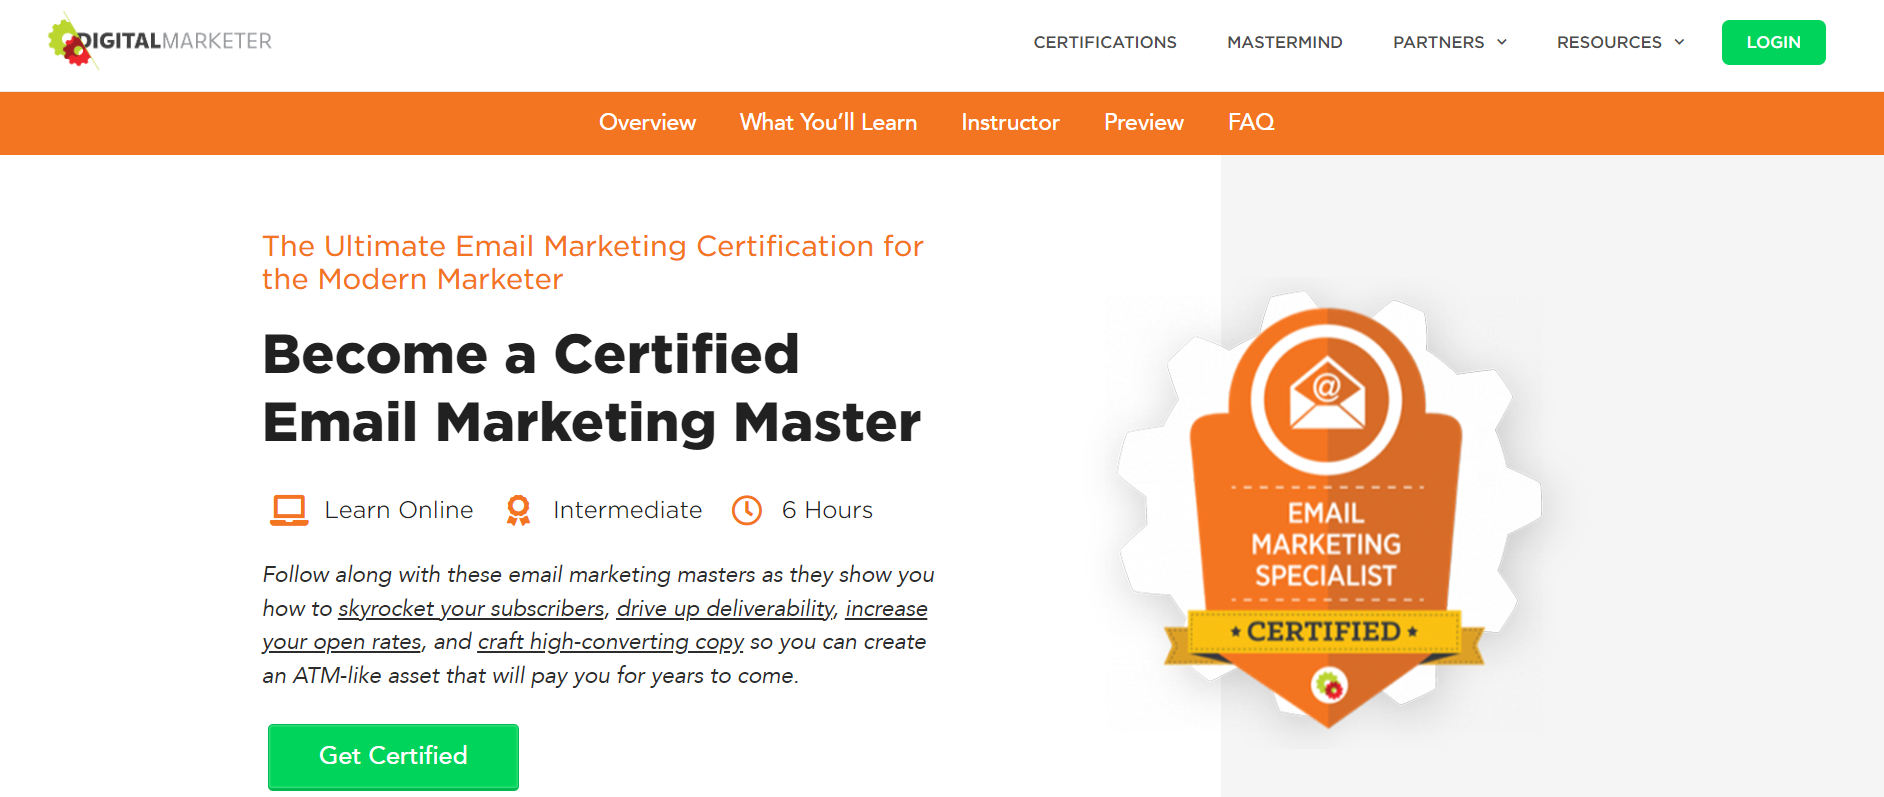 Digital Marketer Email Marketing Mastery